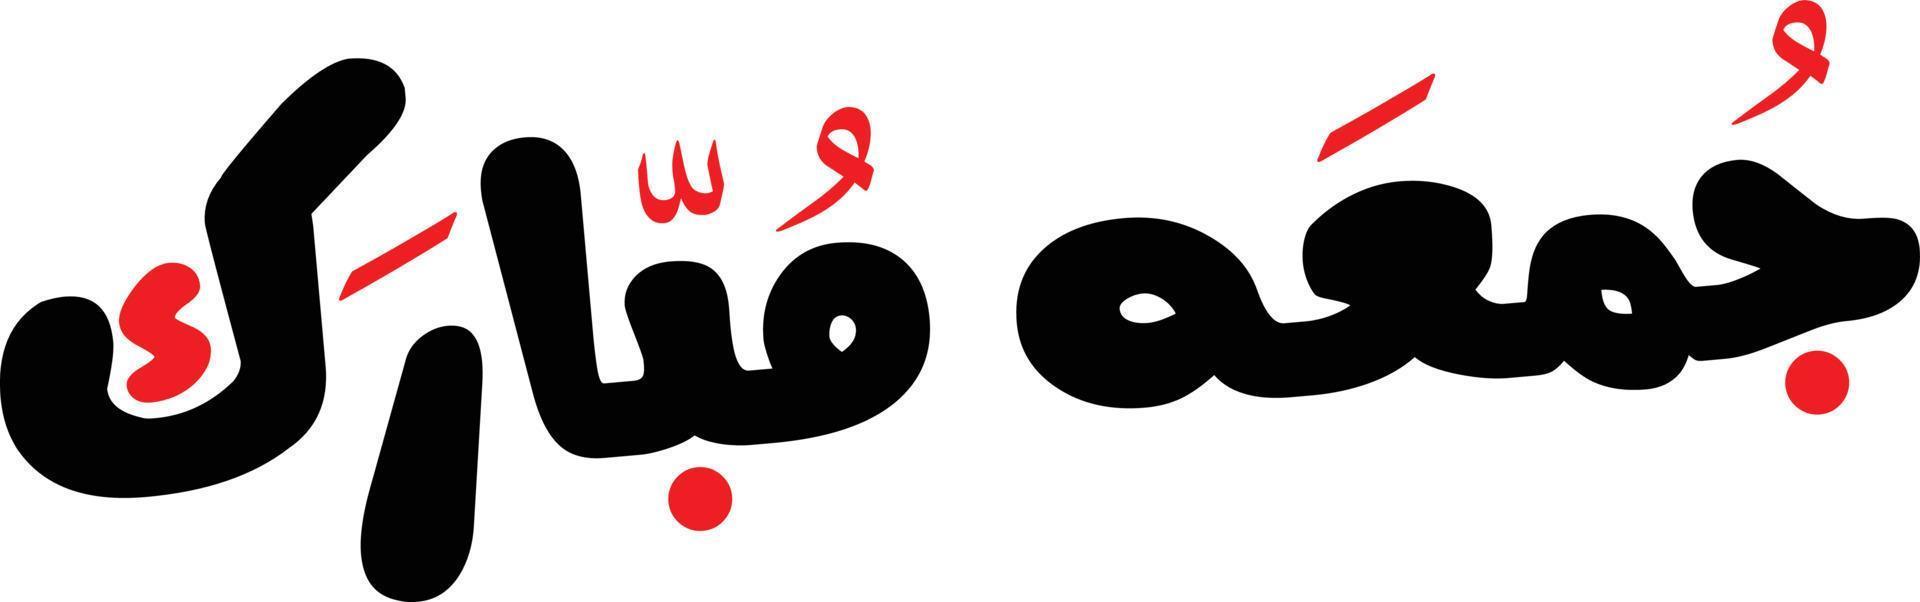 jumma mubarach, jumma mubarakh PNG tekst Urdu Arabisch schoonschrift stijl, mooi tekst van jumma mubarach, nieuw jumma mubarakh Urdu Arabisch Turks schoonschrift stijl vector